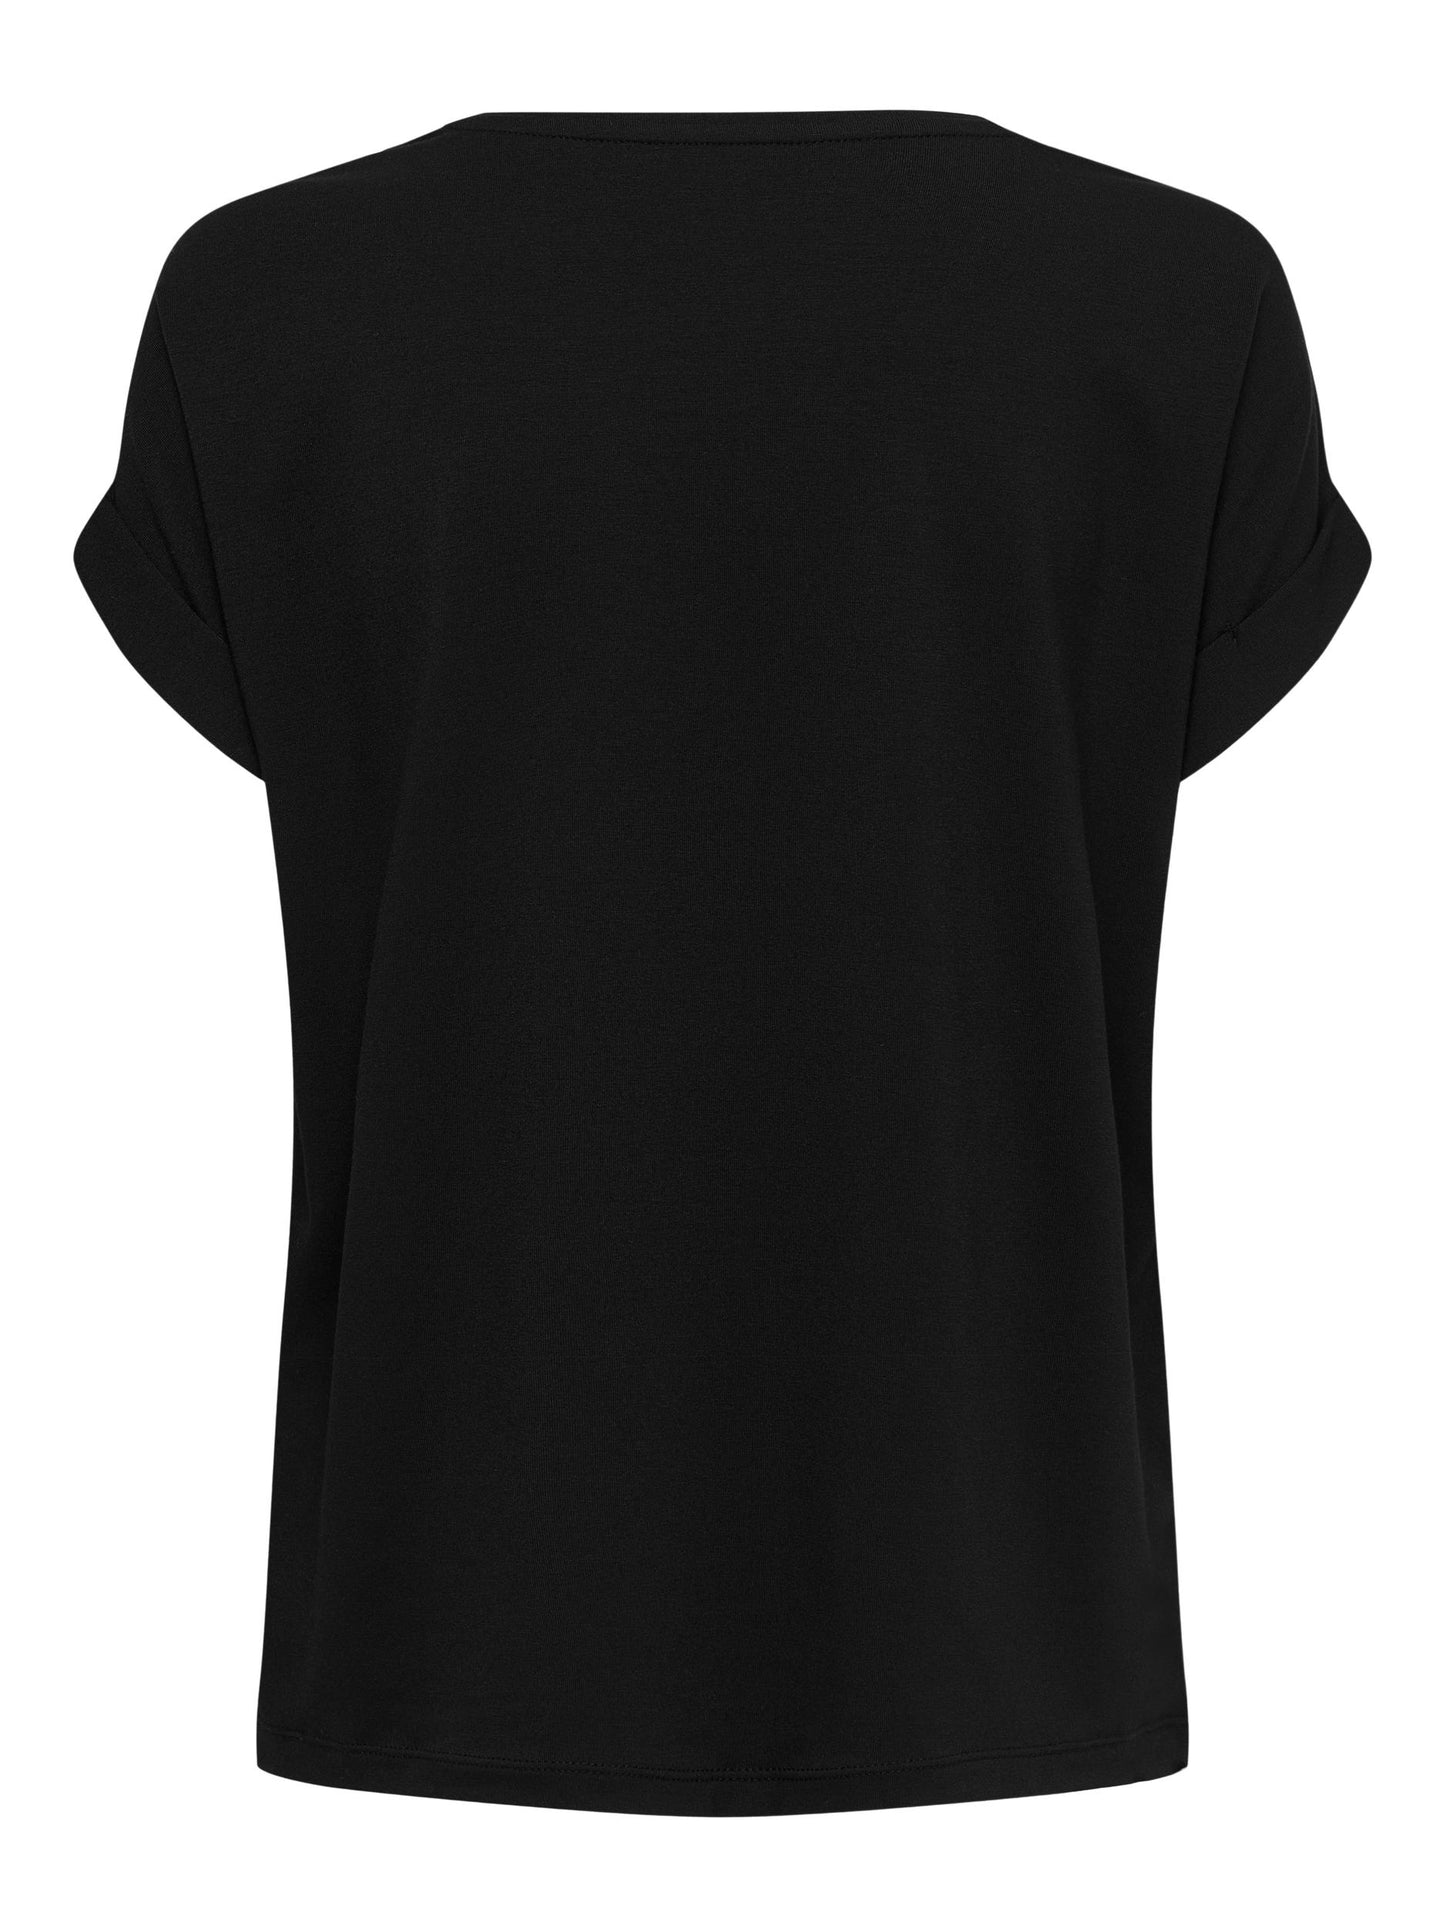 Moster T-Shirt - Black